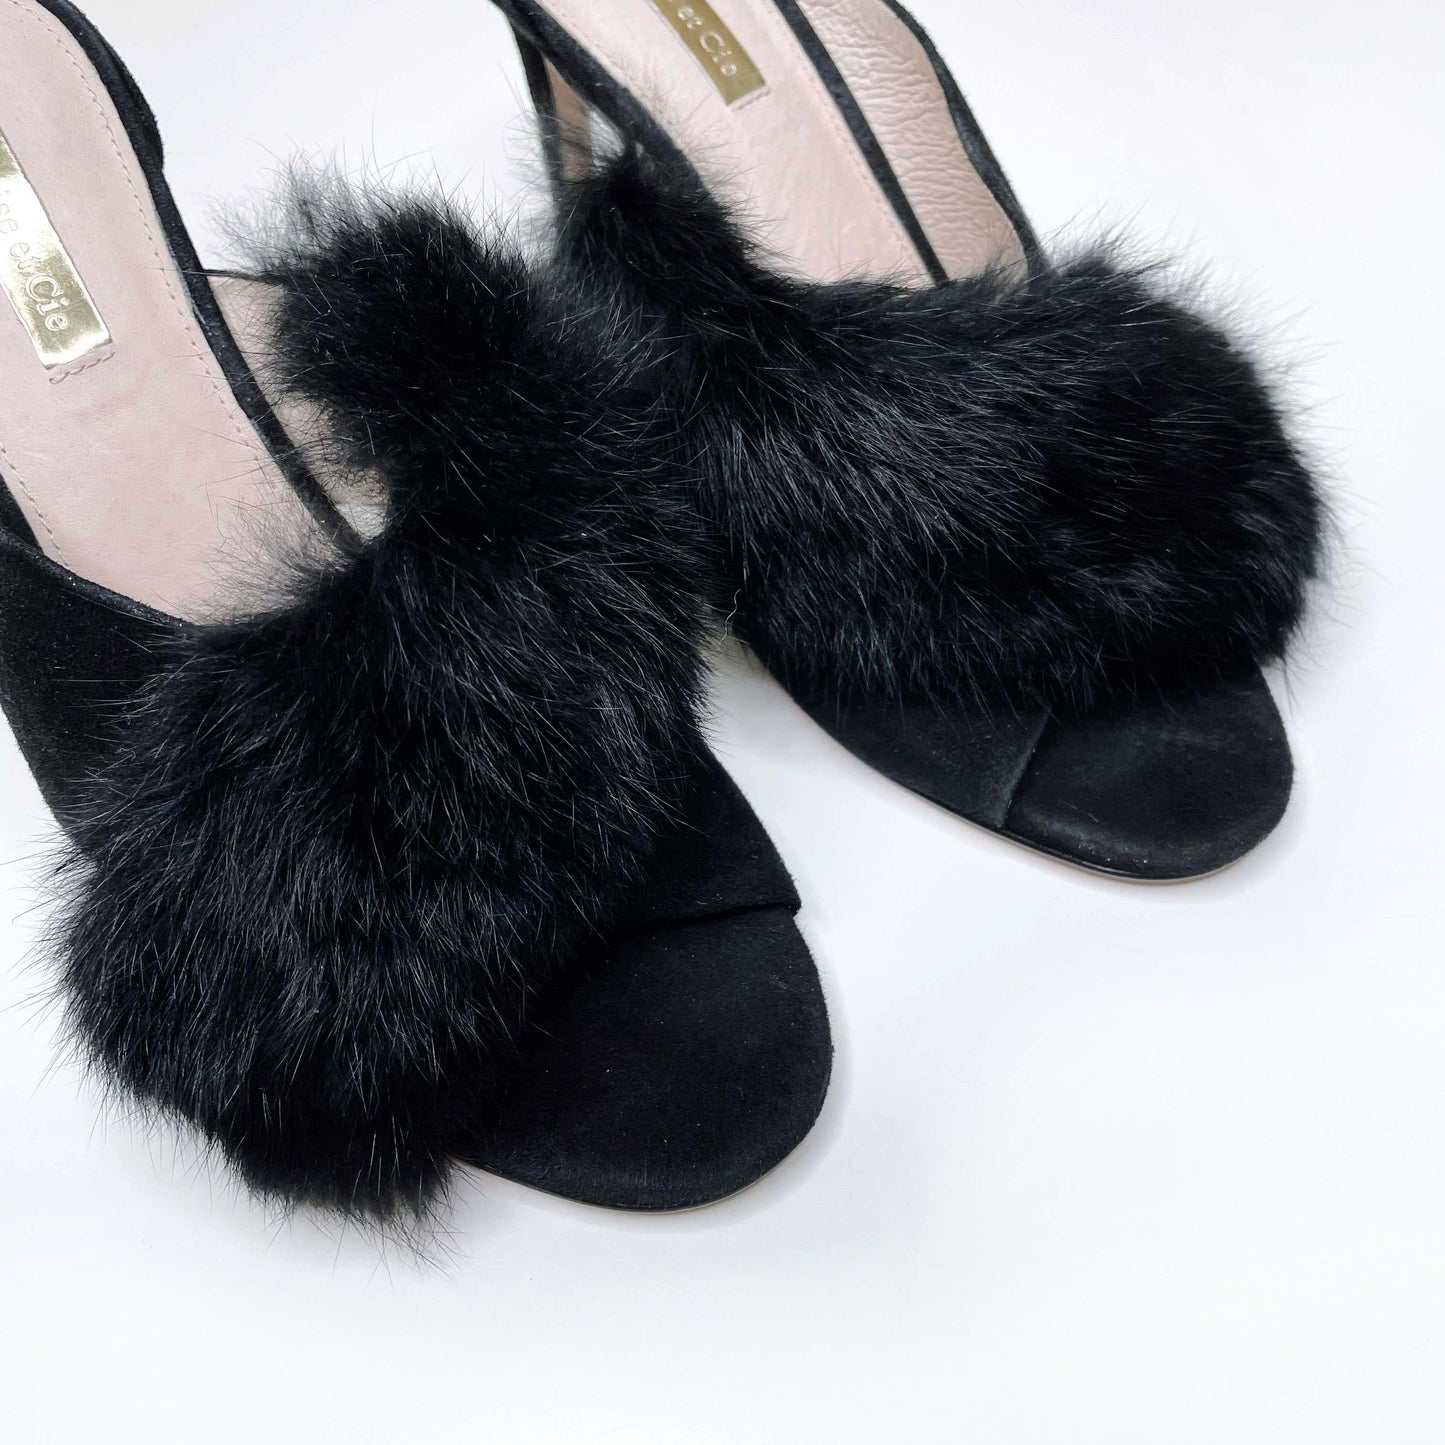 louise et cie black holloway rabbit fur slip on heels - size 8.5